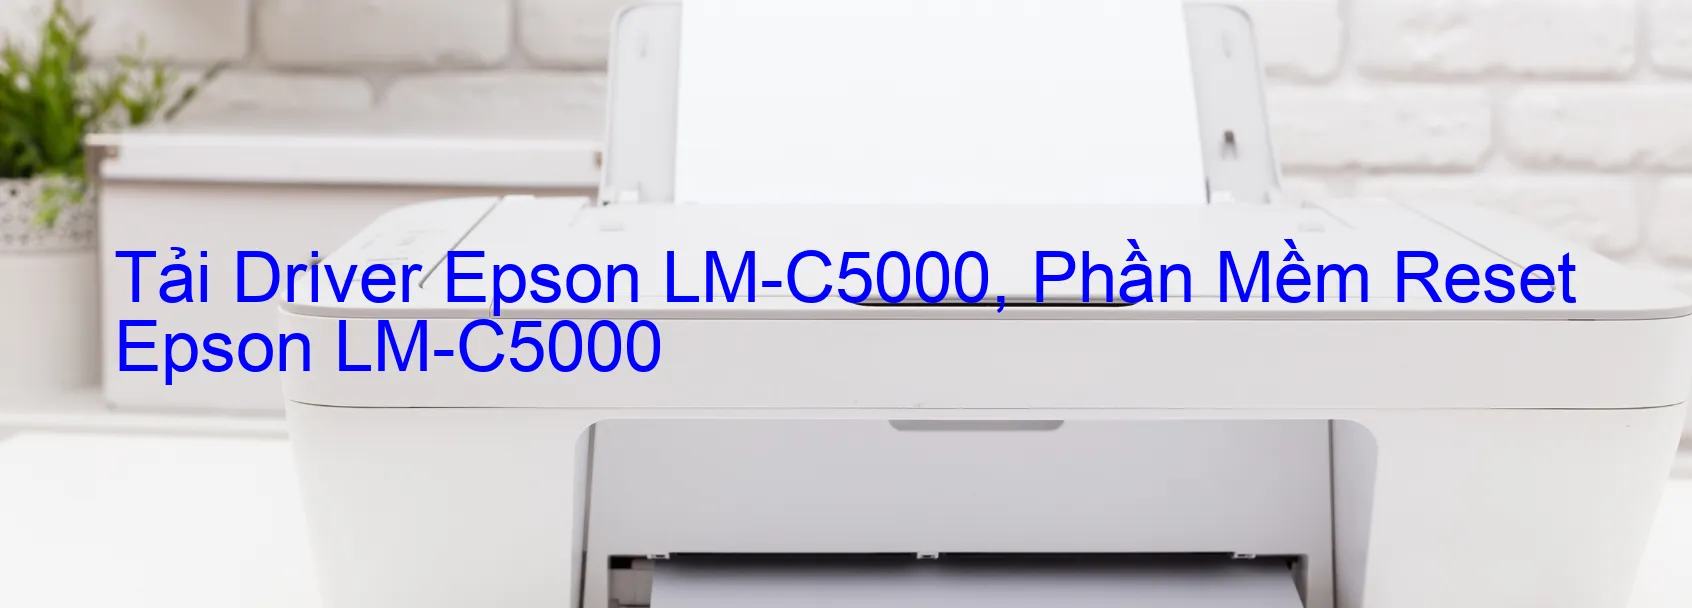 Driver Epson LM-C5000, Phần Mềm Reset Epson LM-C5000